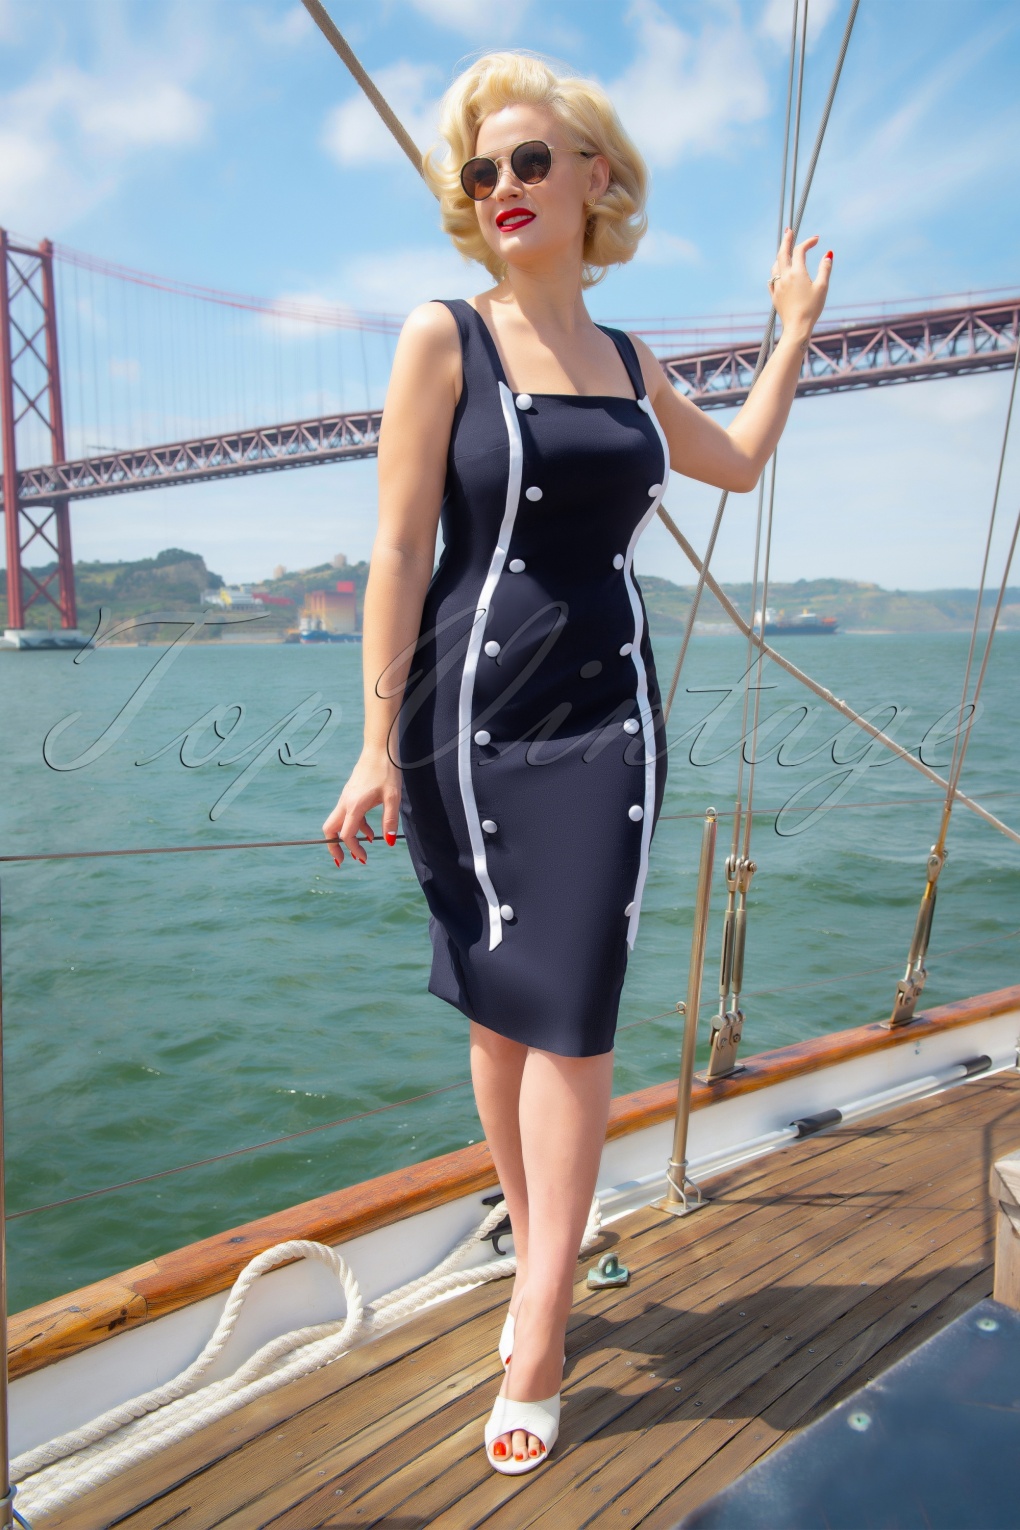 Sailor Dresses, Nautical Theme Dress, WW2 Dresses